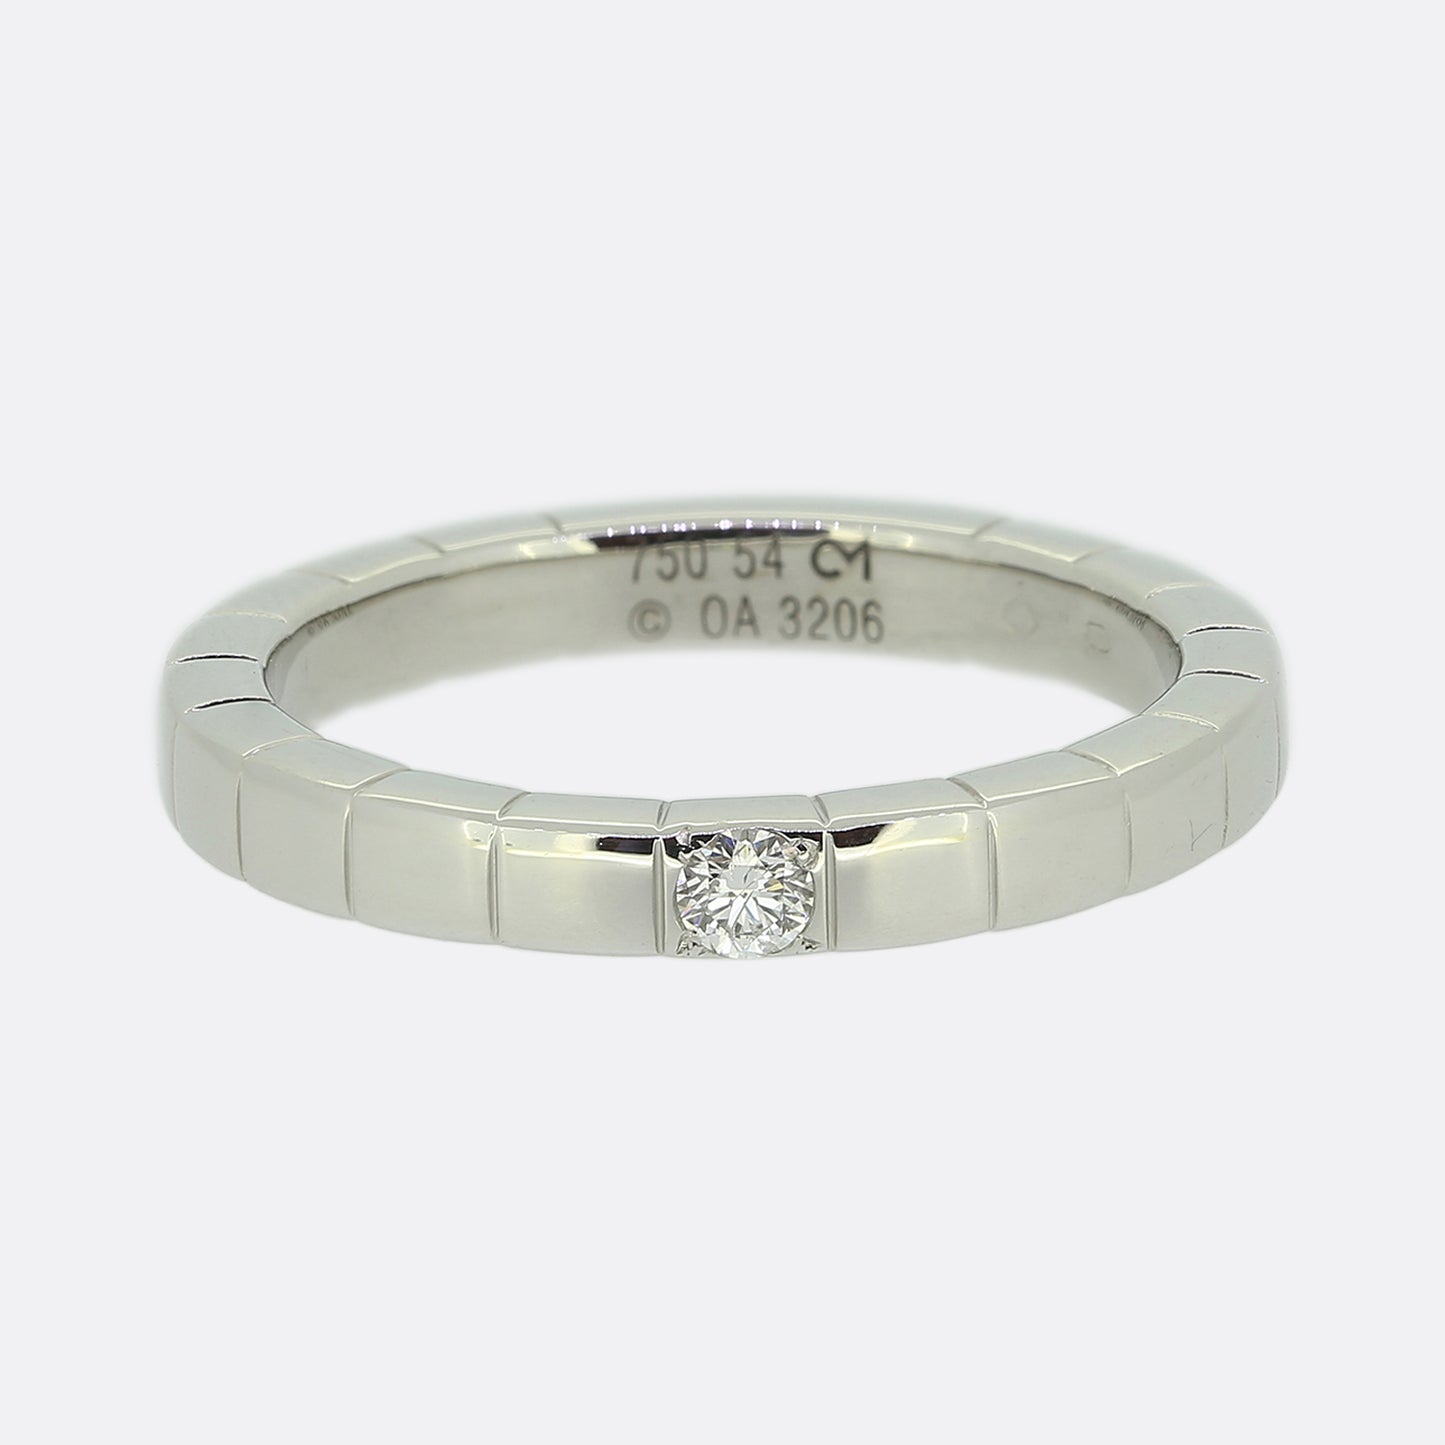 Cartier Lanières Diamond Band Ring Size N (54)